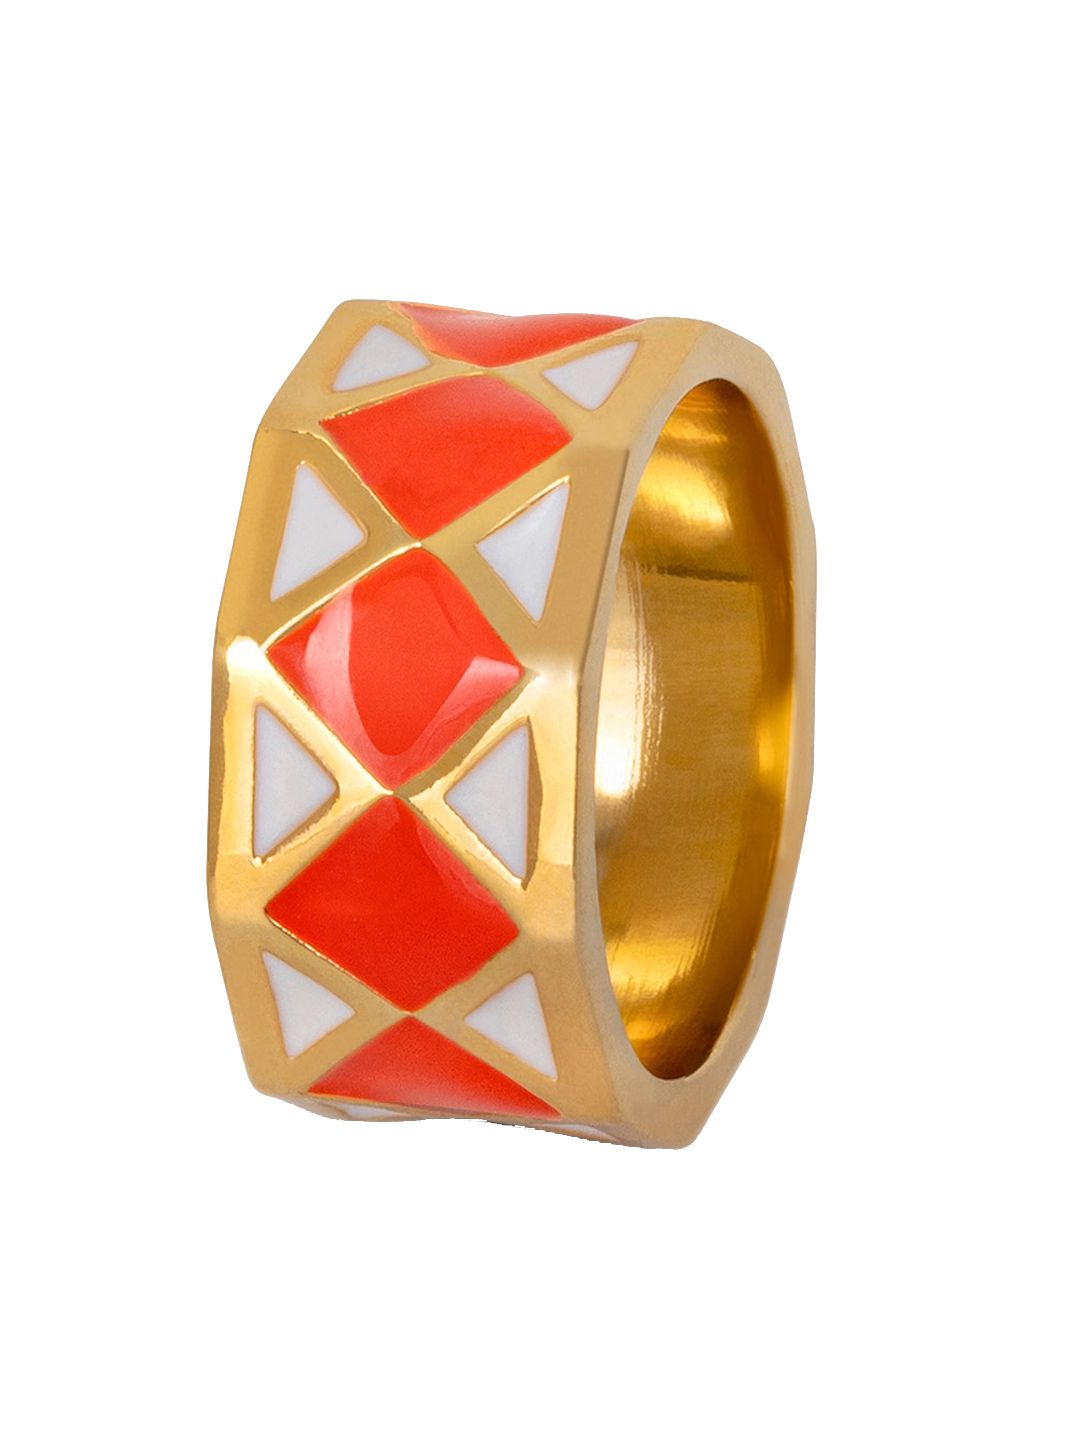 MNSH Gold-Toned & Orange Enamelled Ring Price in India